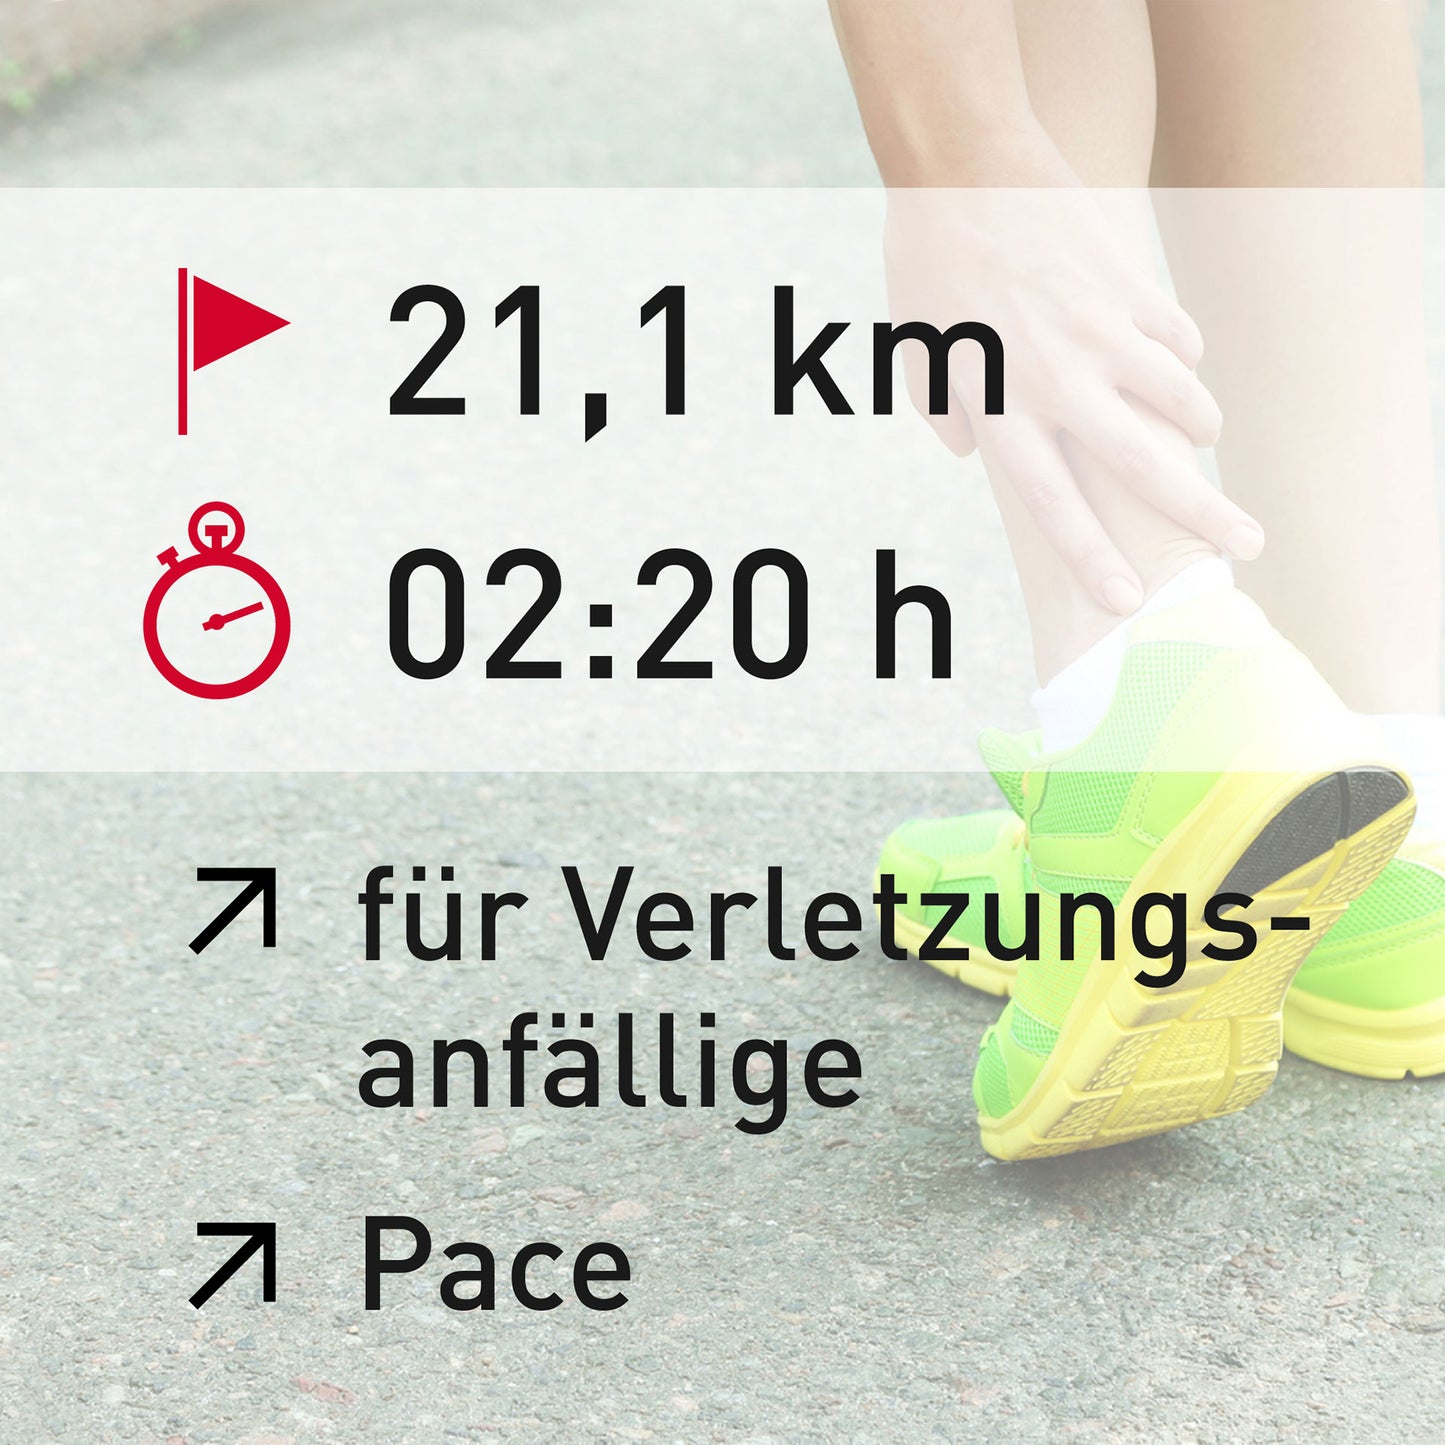 TRAININGSPLAN: 21,1 km | Verletzungsanfällige Läufer | Pace